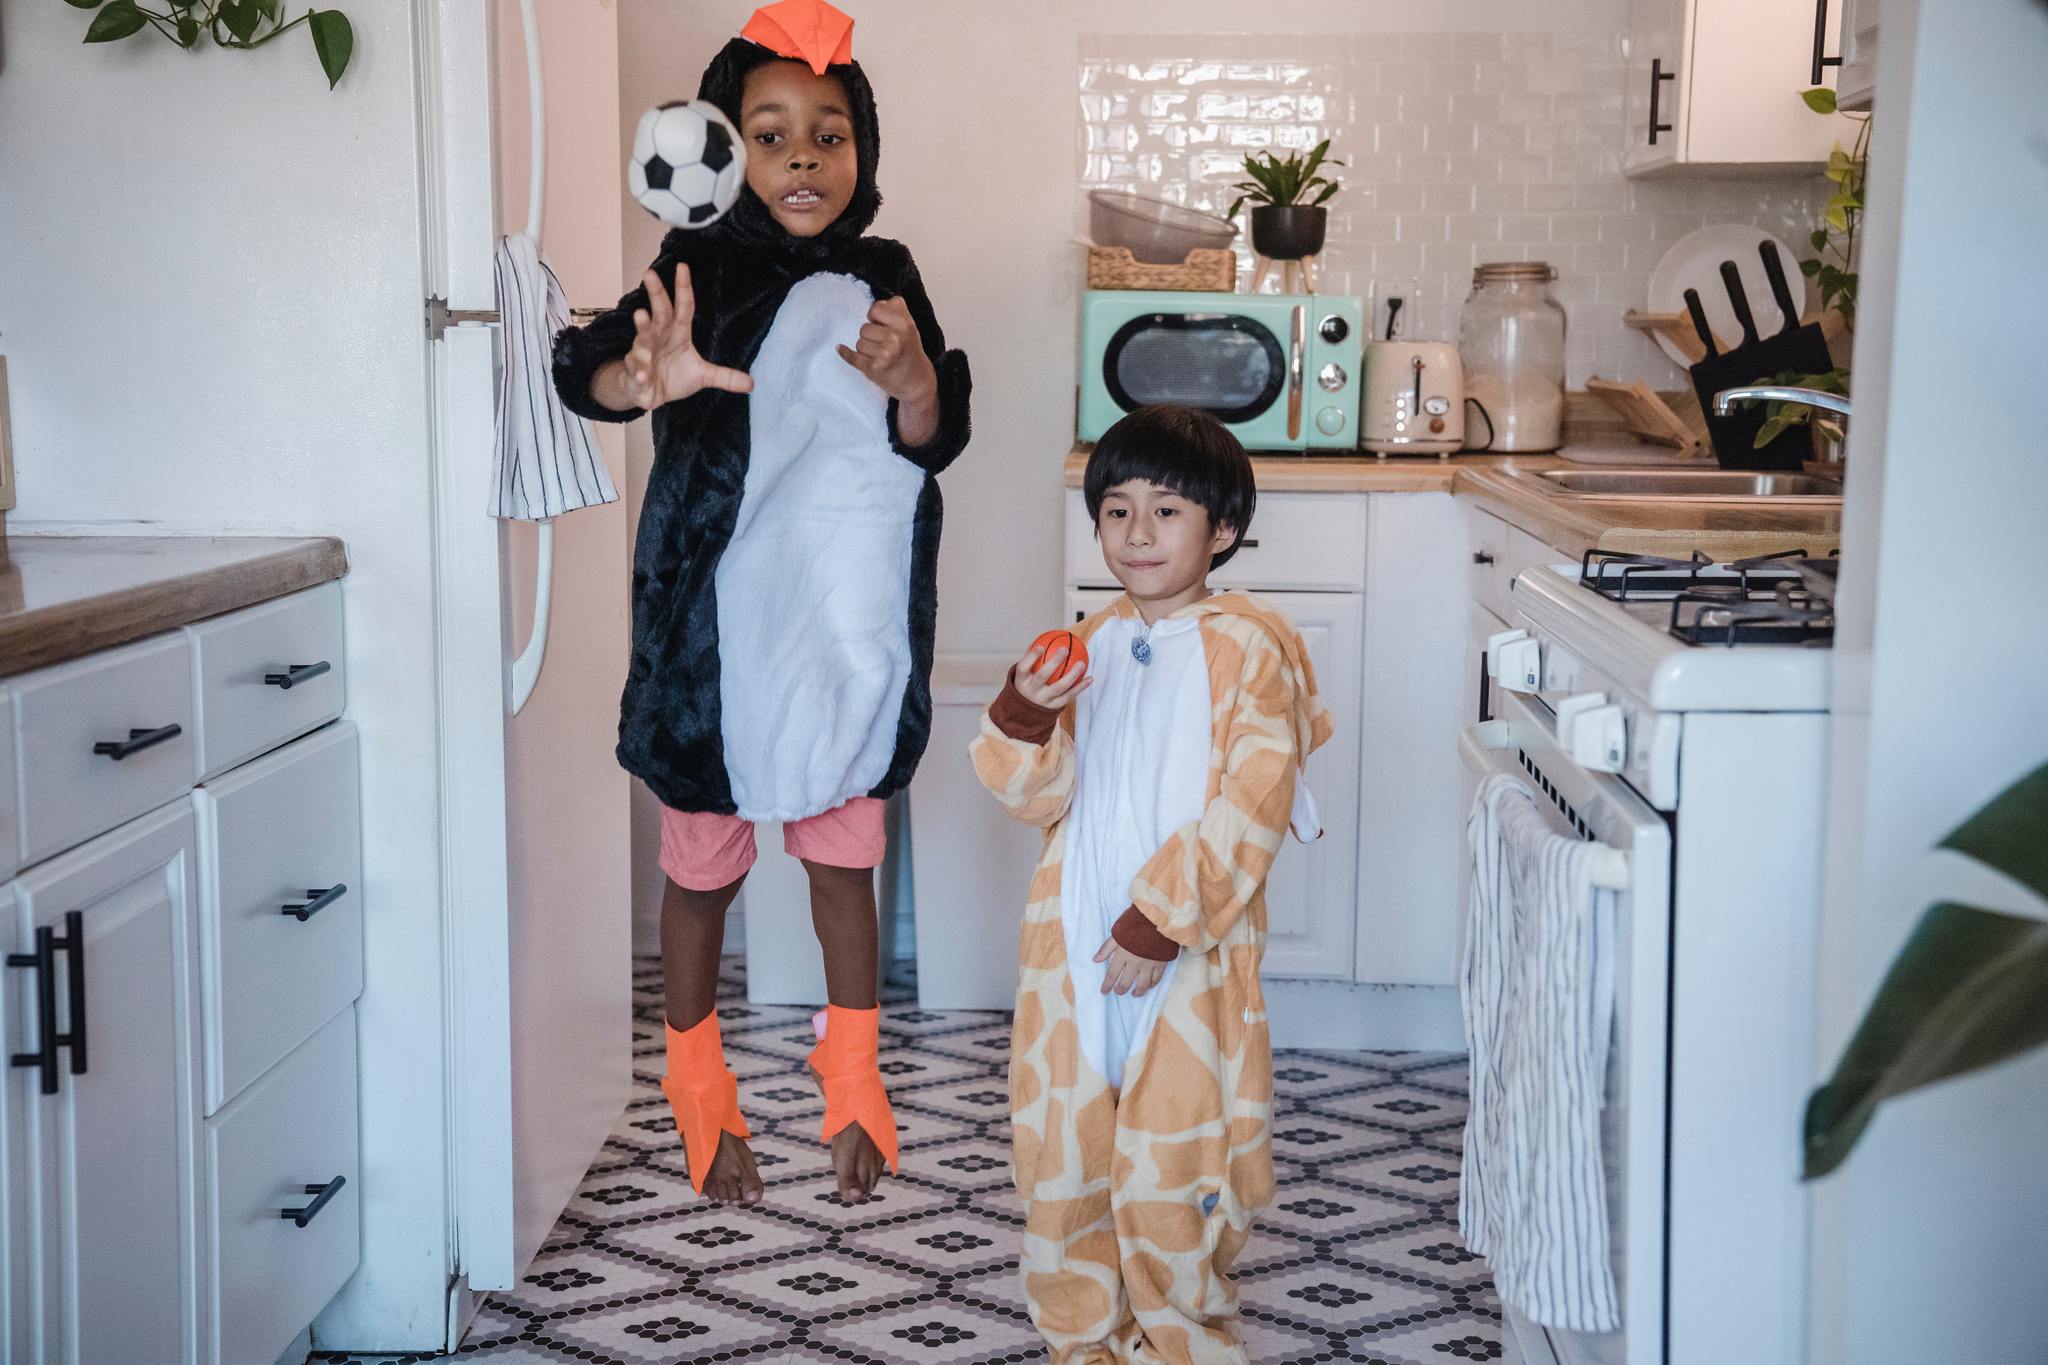 Kids wearing costumes, jumping in the kitchen next to fridge. - via fridge.com